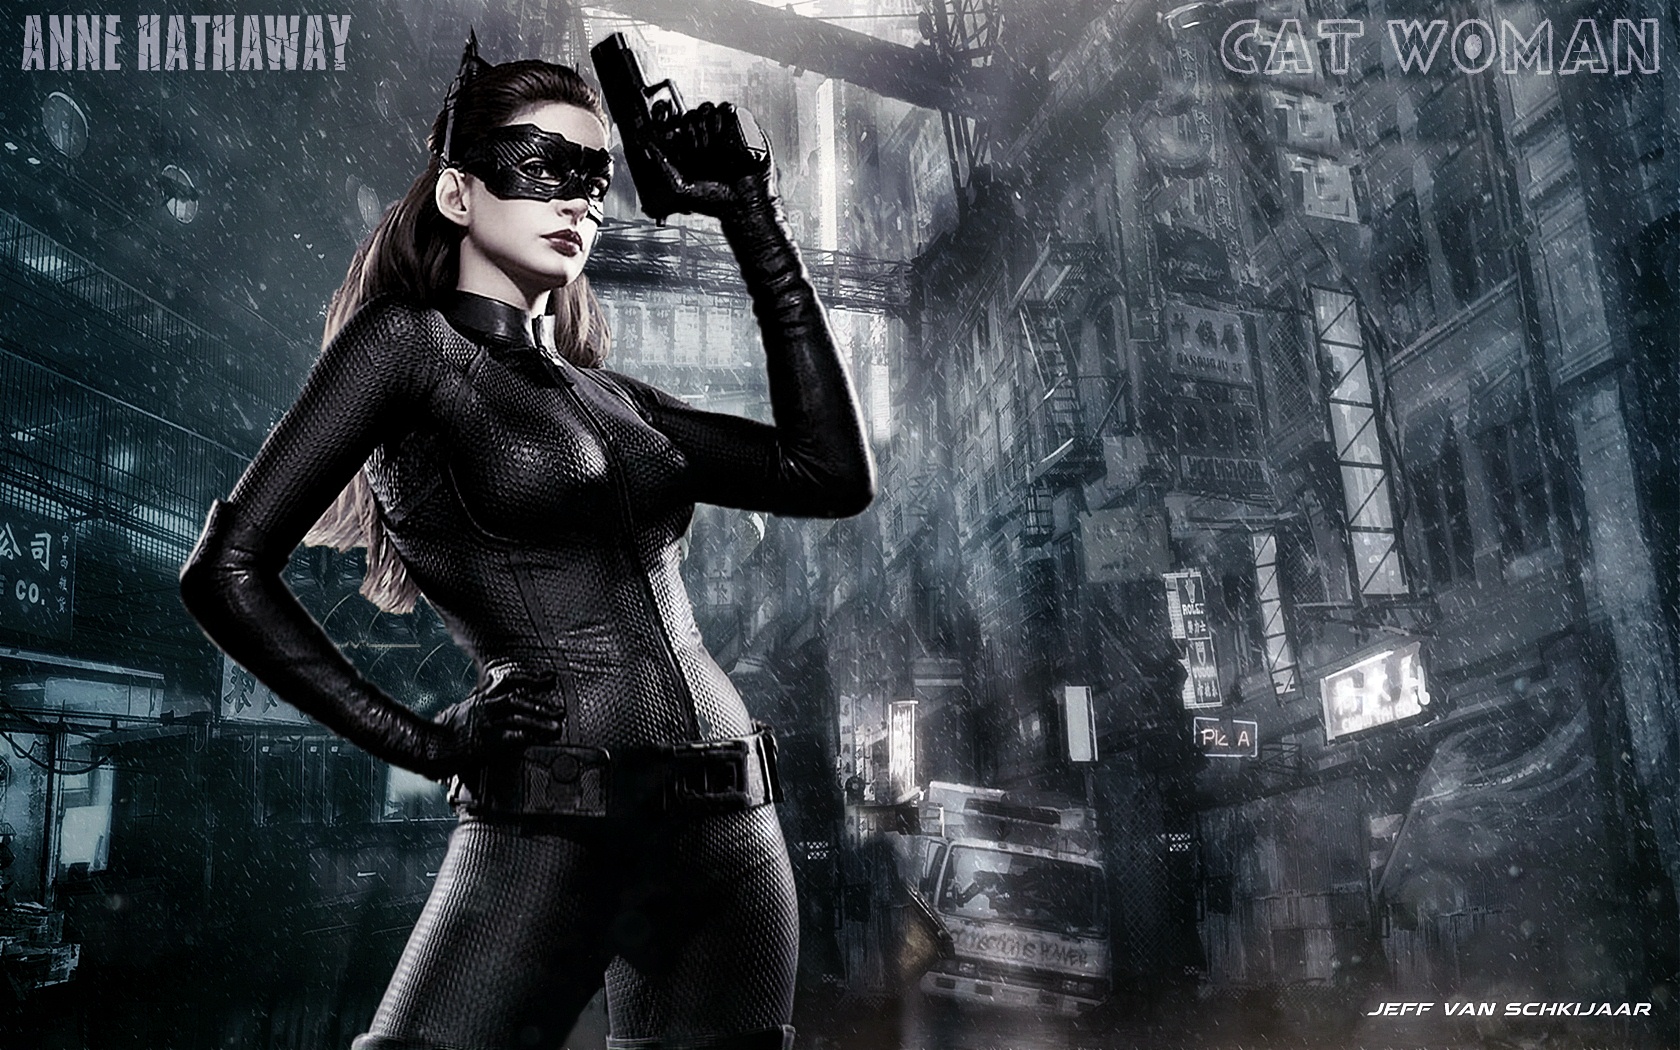 catwoman tapete,erfundener charakter,action adventure spiel,digitales compositing,superschurke,katzenfrau